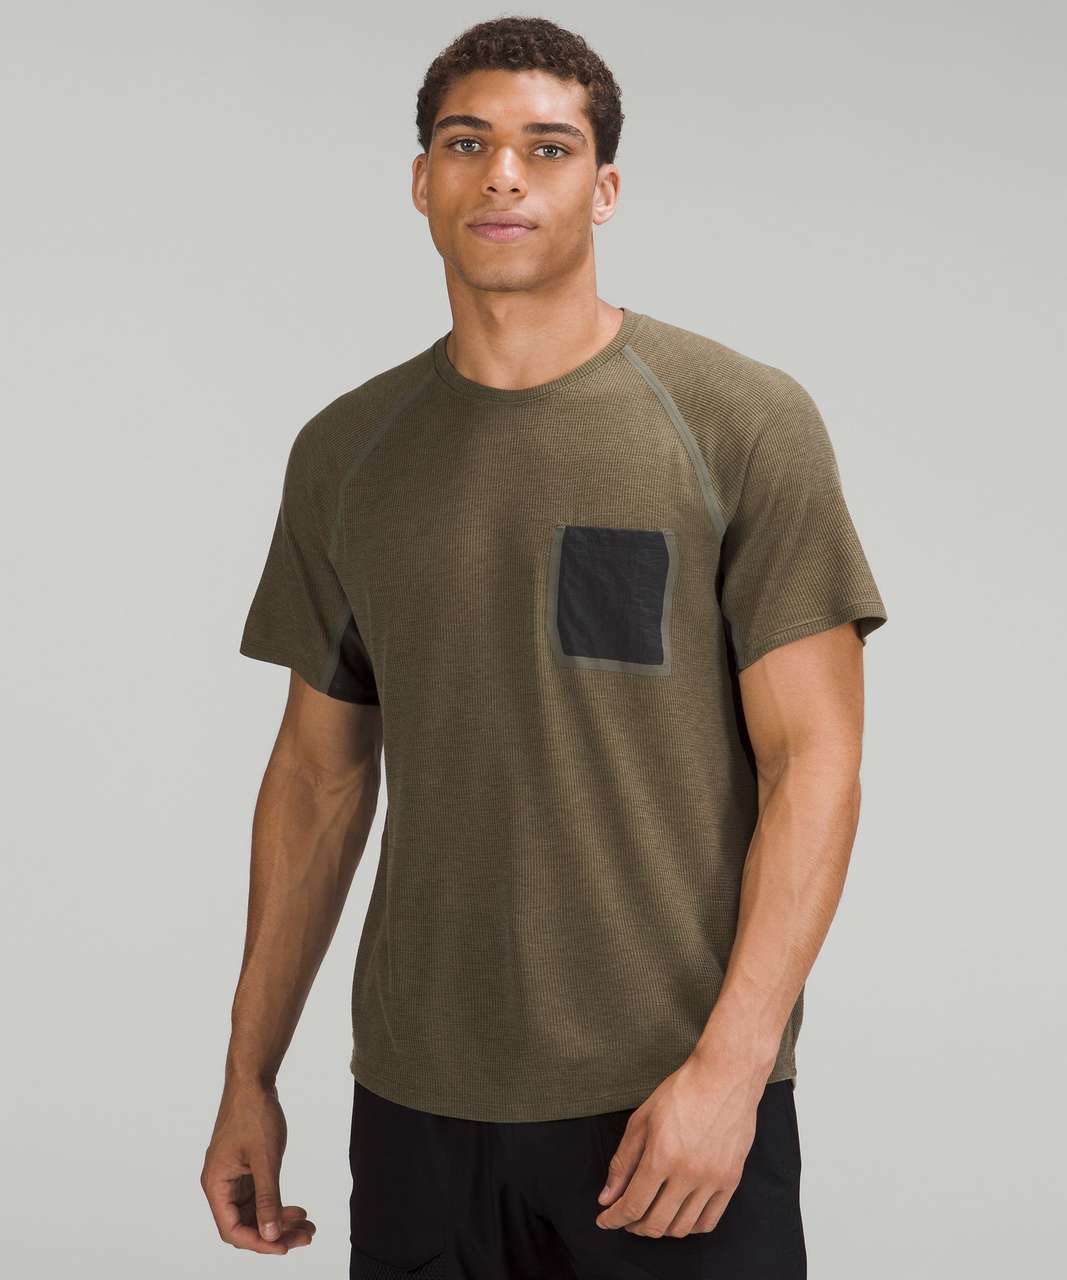 https://storage.googleapis.com/lulu-fanatics/product/78768/1280/lululemon-ventilated-hiking-short-sleeve-shirt-carob-brown-051415-418873.jpg